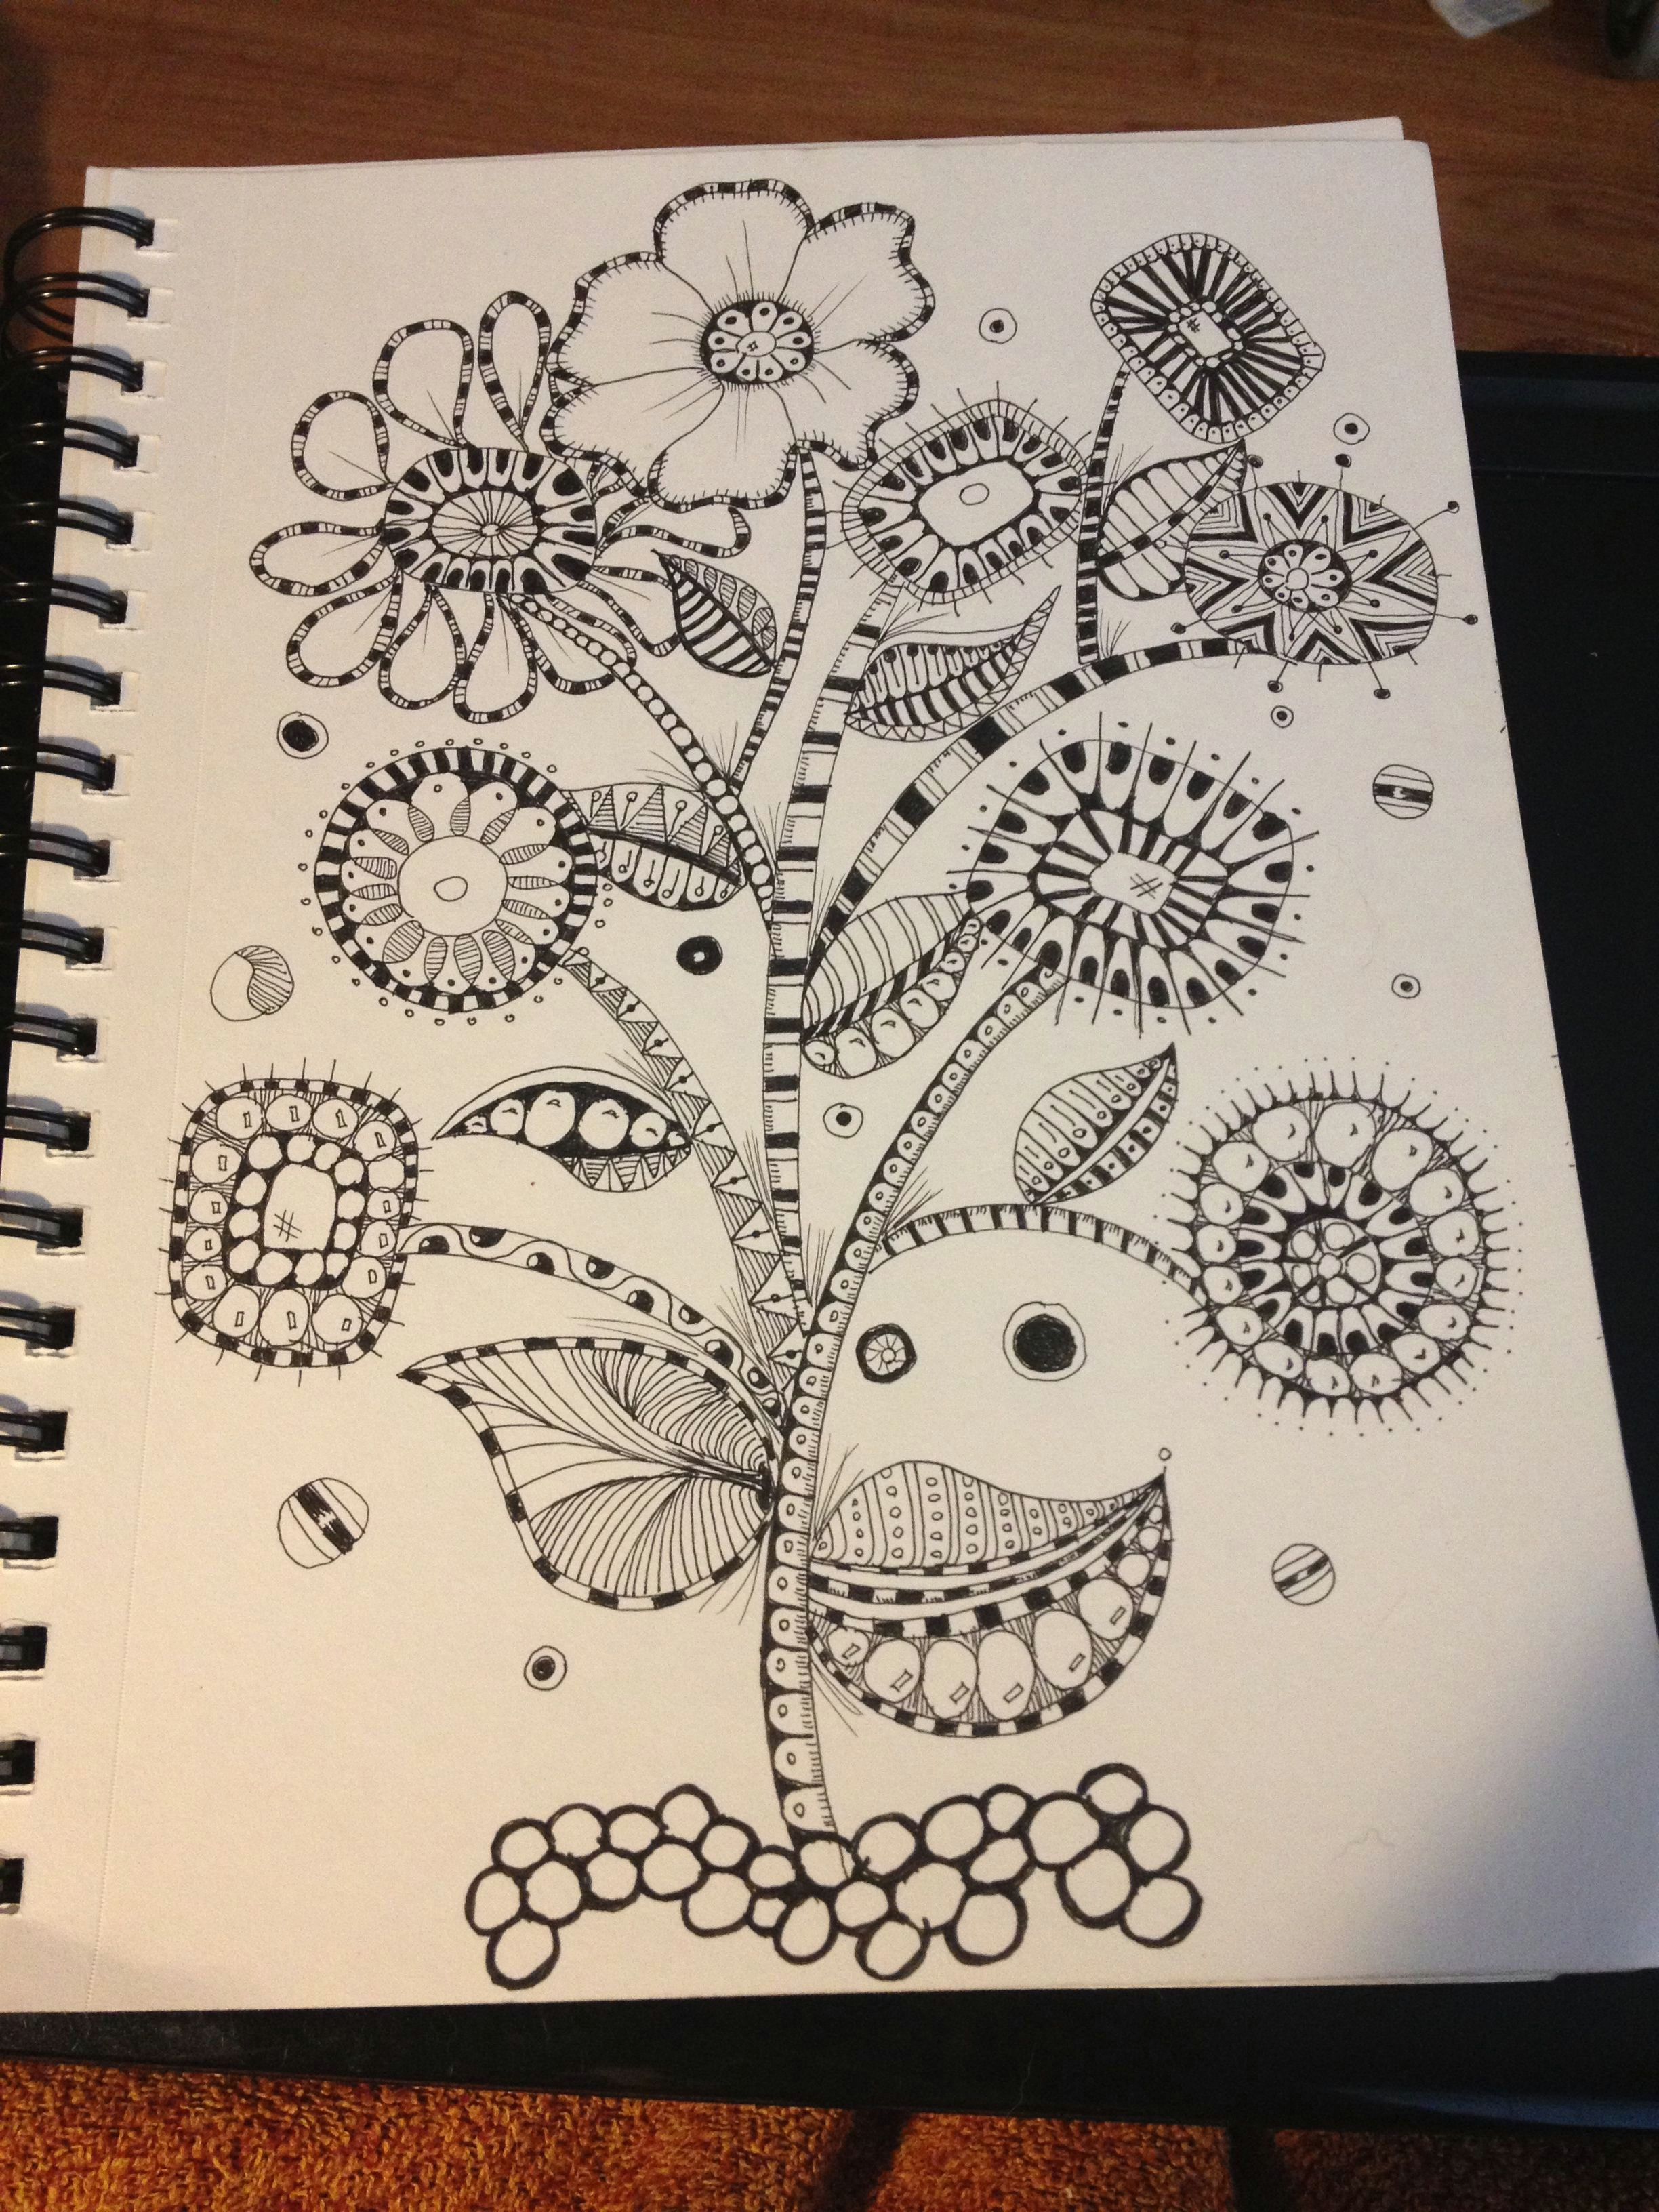 Drawings Of Flower Gardens Zentangle Mod Flower Garden My Coloring Doodles Pinterest